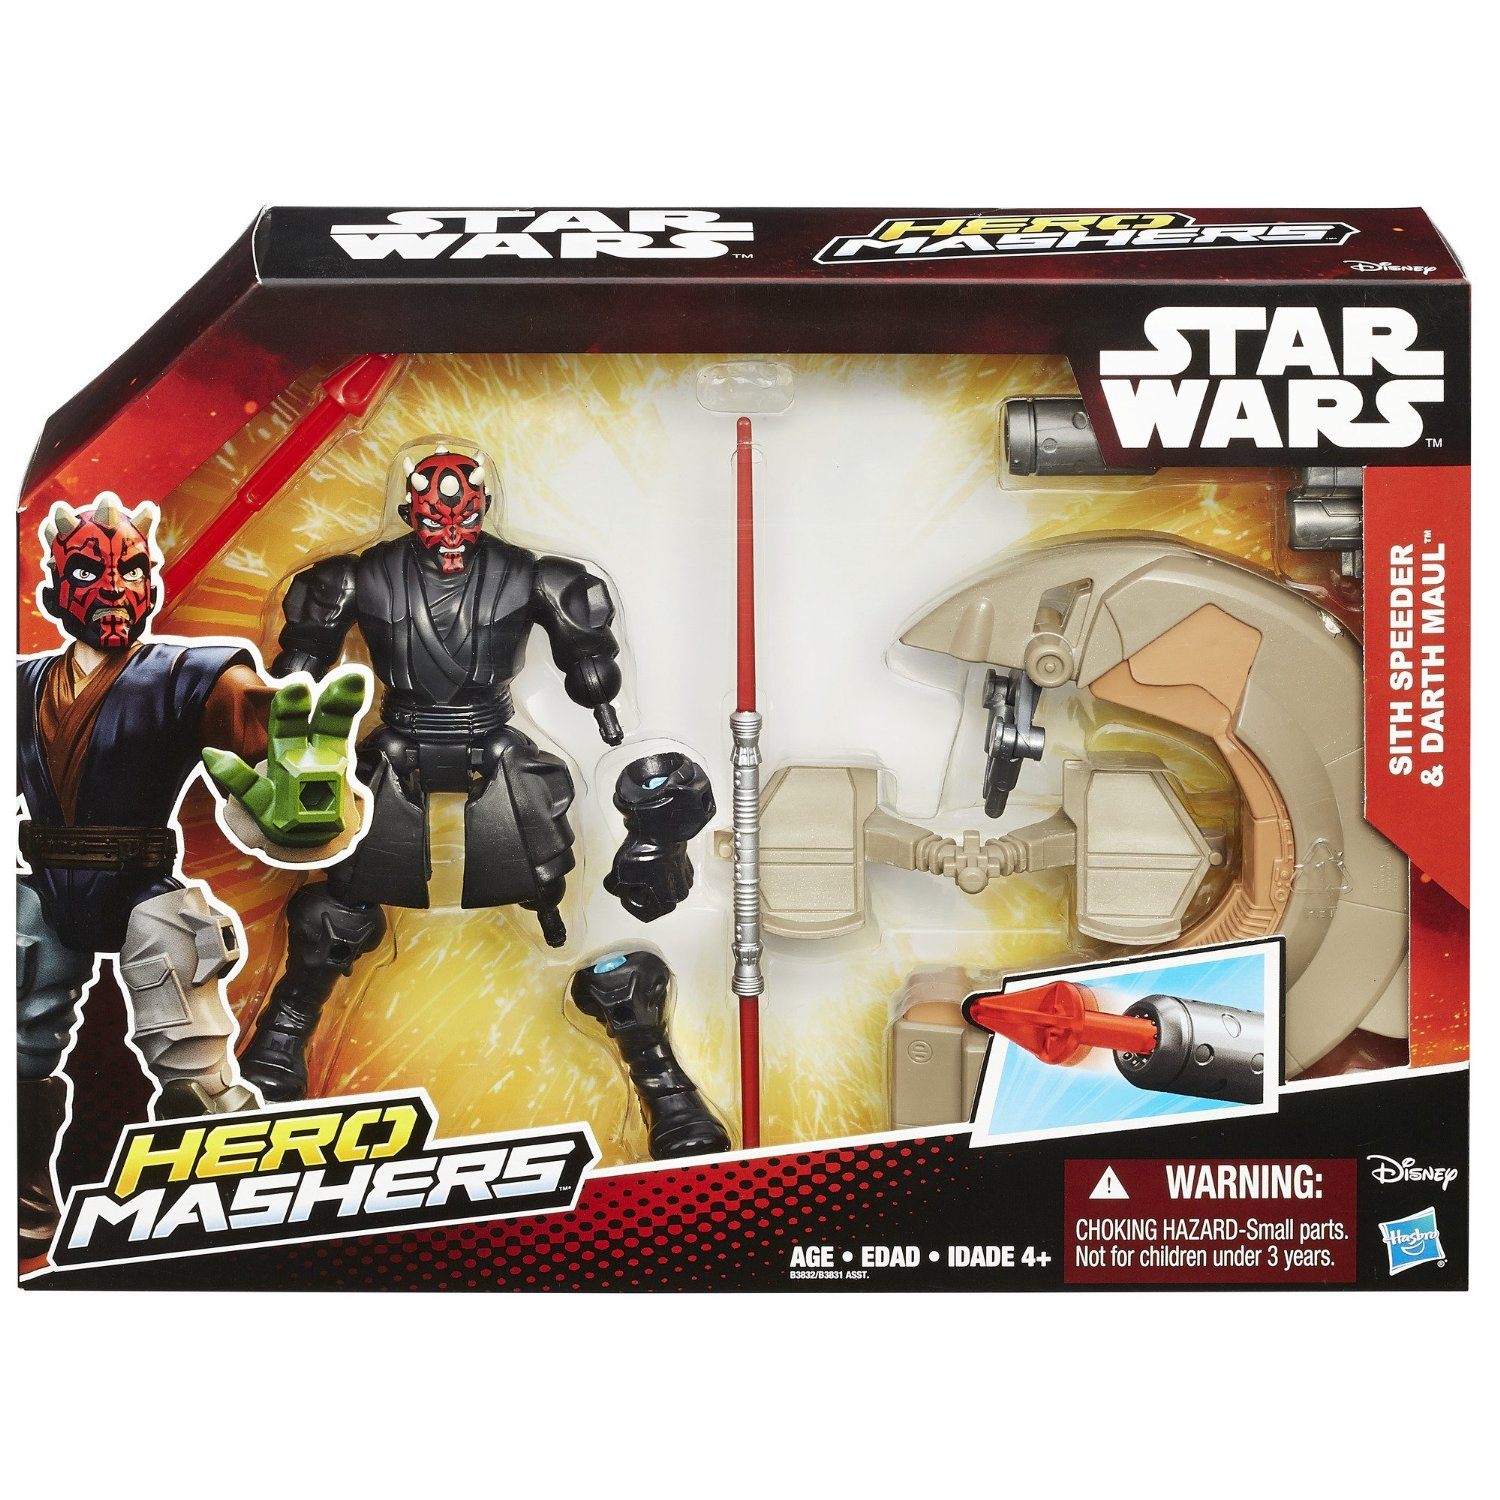 Star Wars Hero Mashers Sith Speeder and Darth Maul Only $7.54! (Reg $21.99)